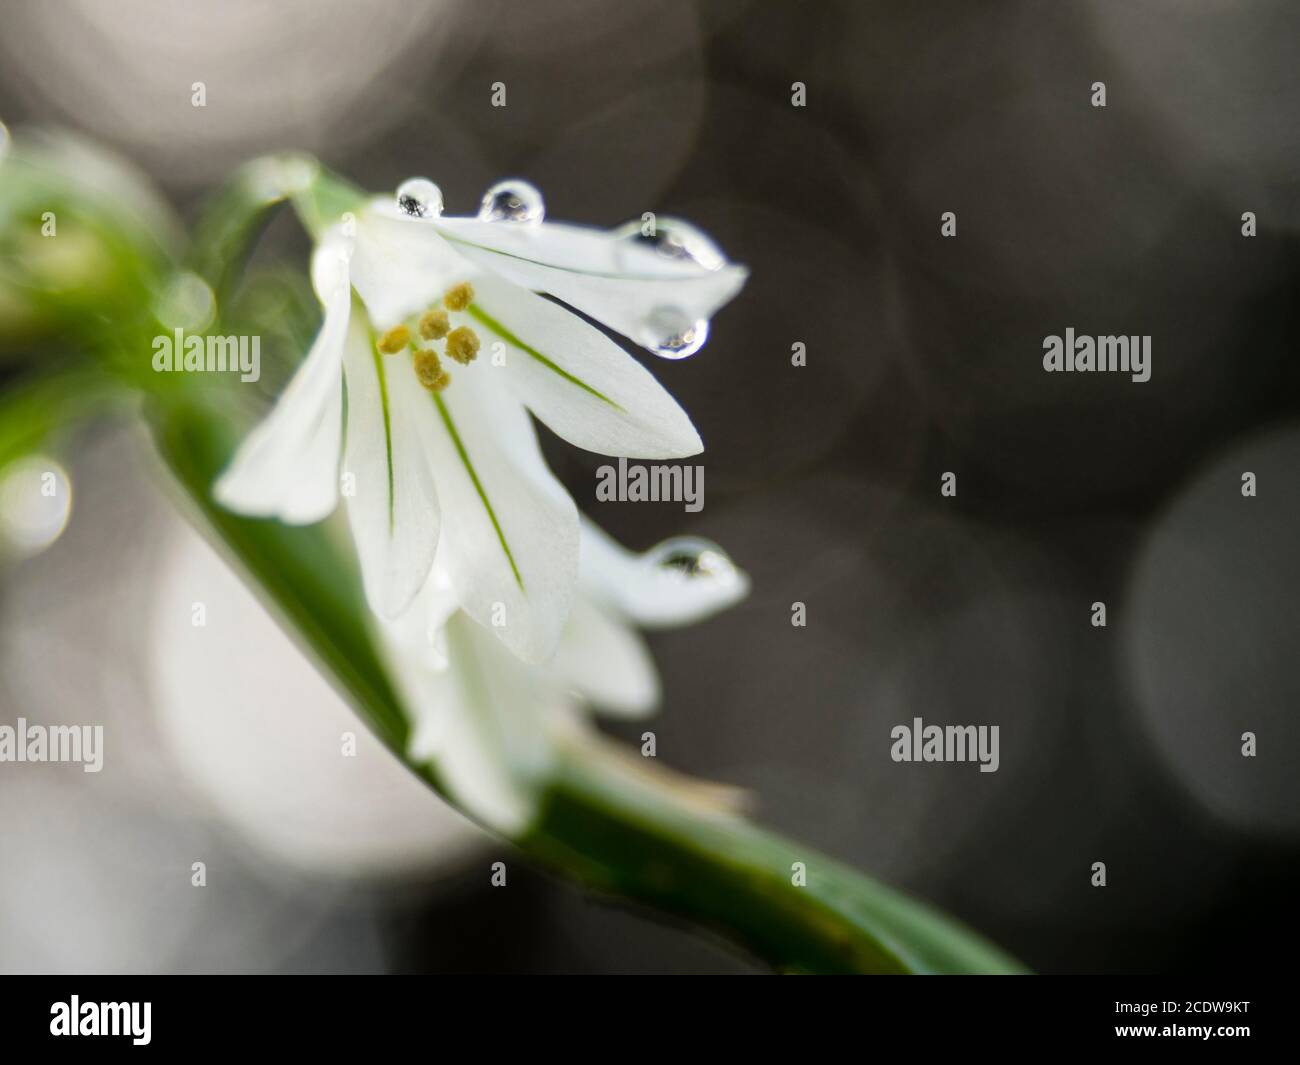 Allium triquetrium (also known as snowbell, three-cornered garlic, three-cornered leek, onion weed, three-sided snowbell) flower with water droplets Stock Photo